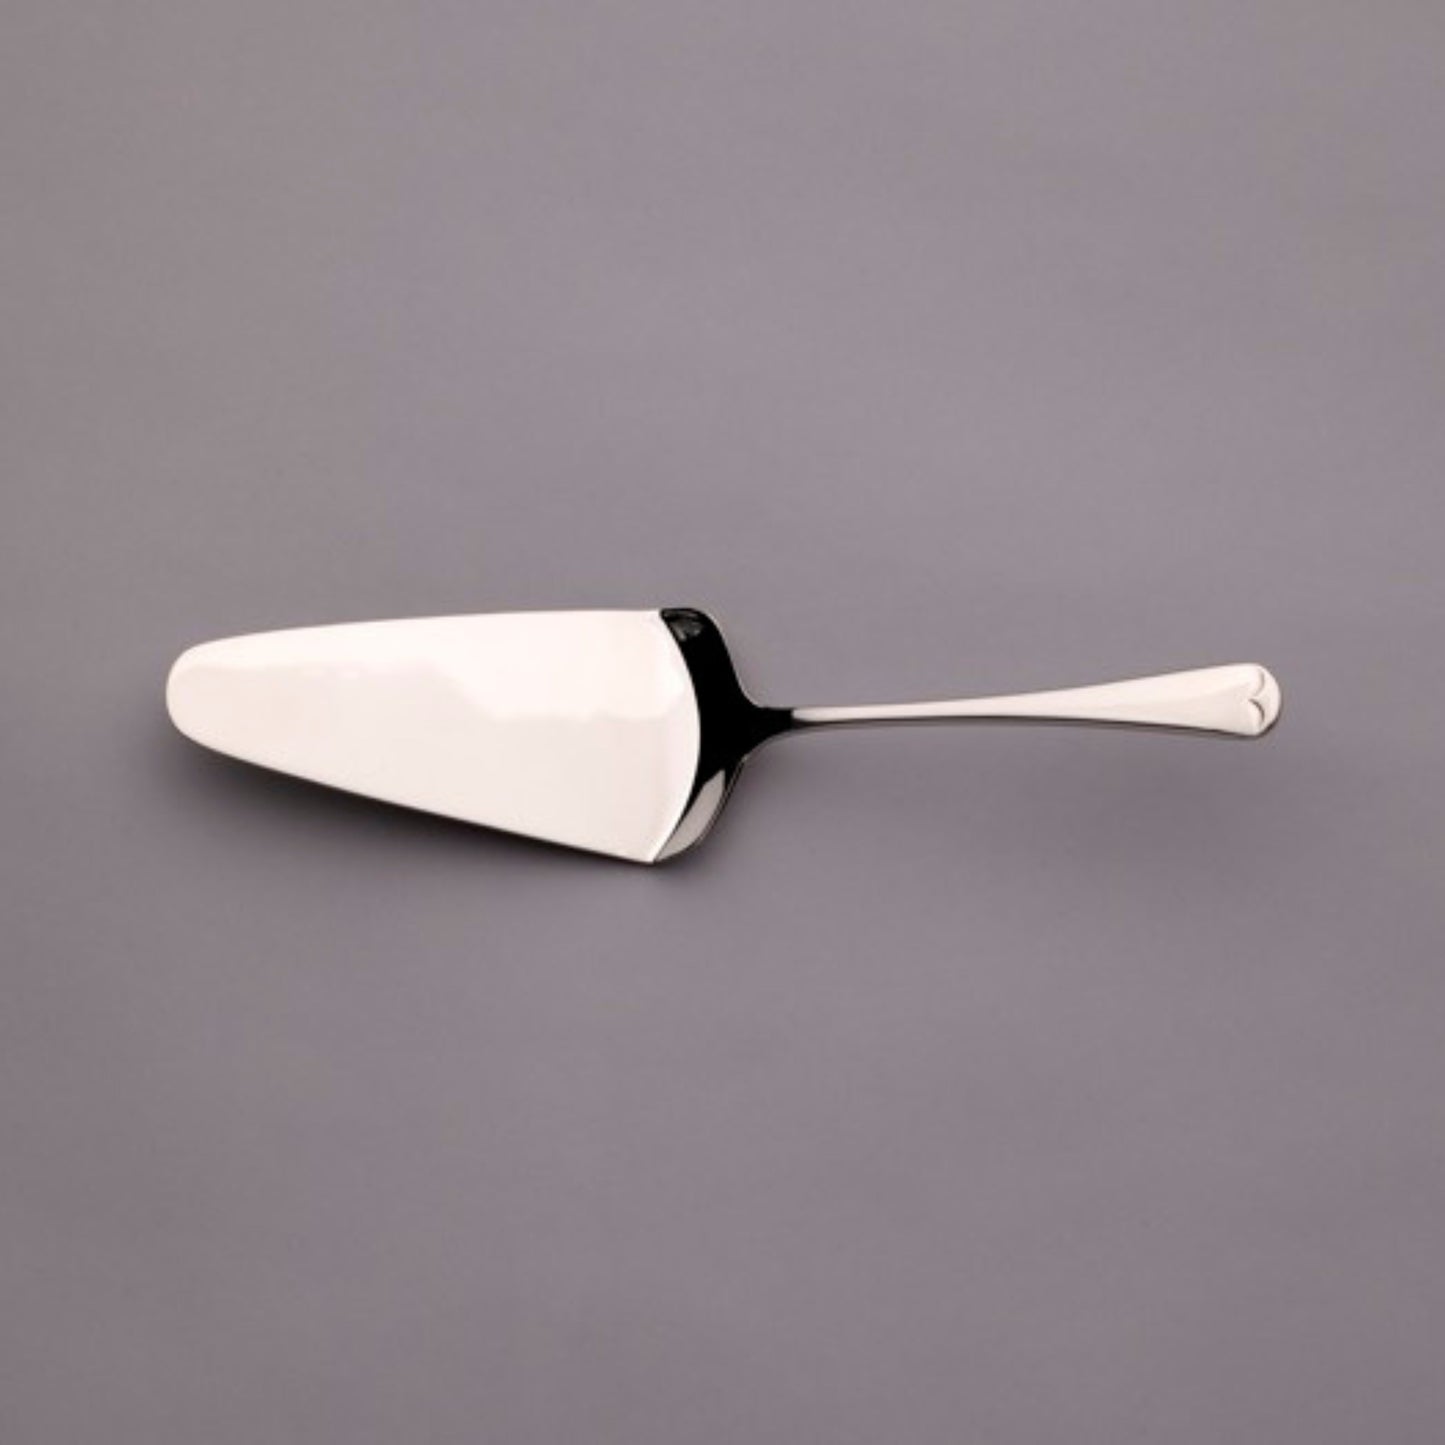 Plain Fiddle silver plated flatware cutlery